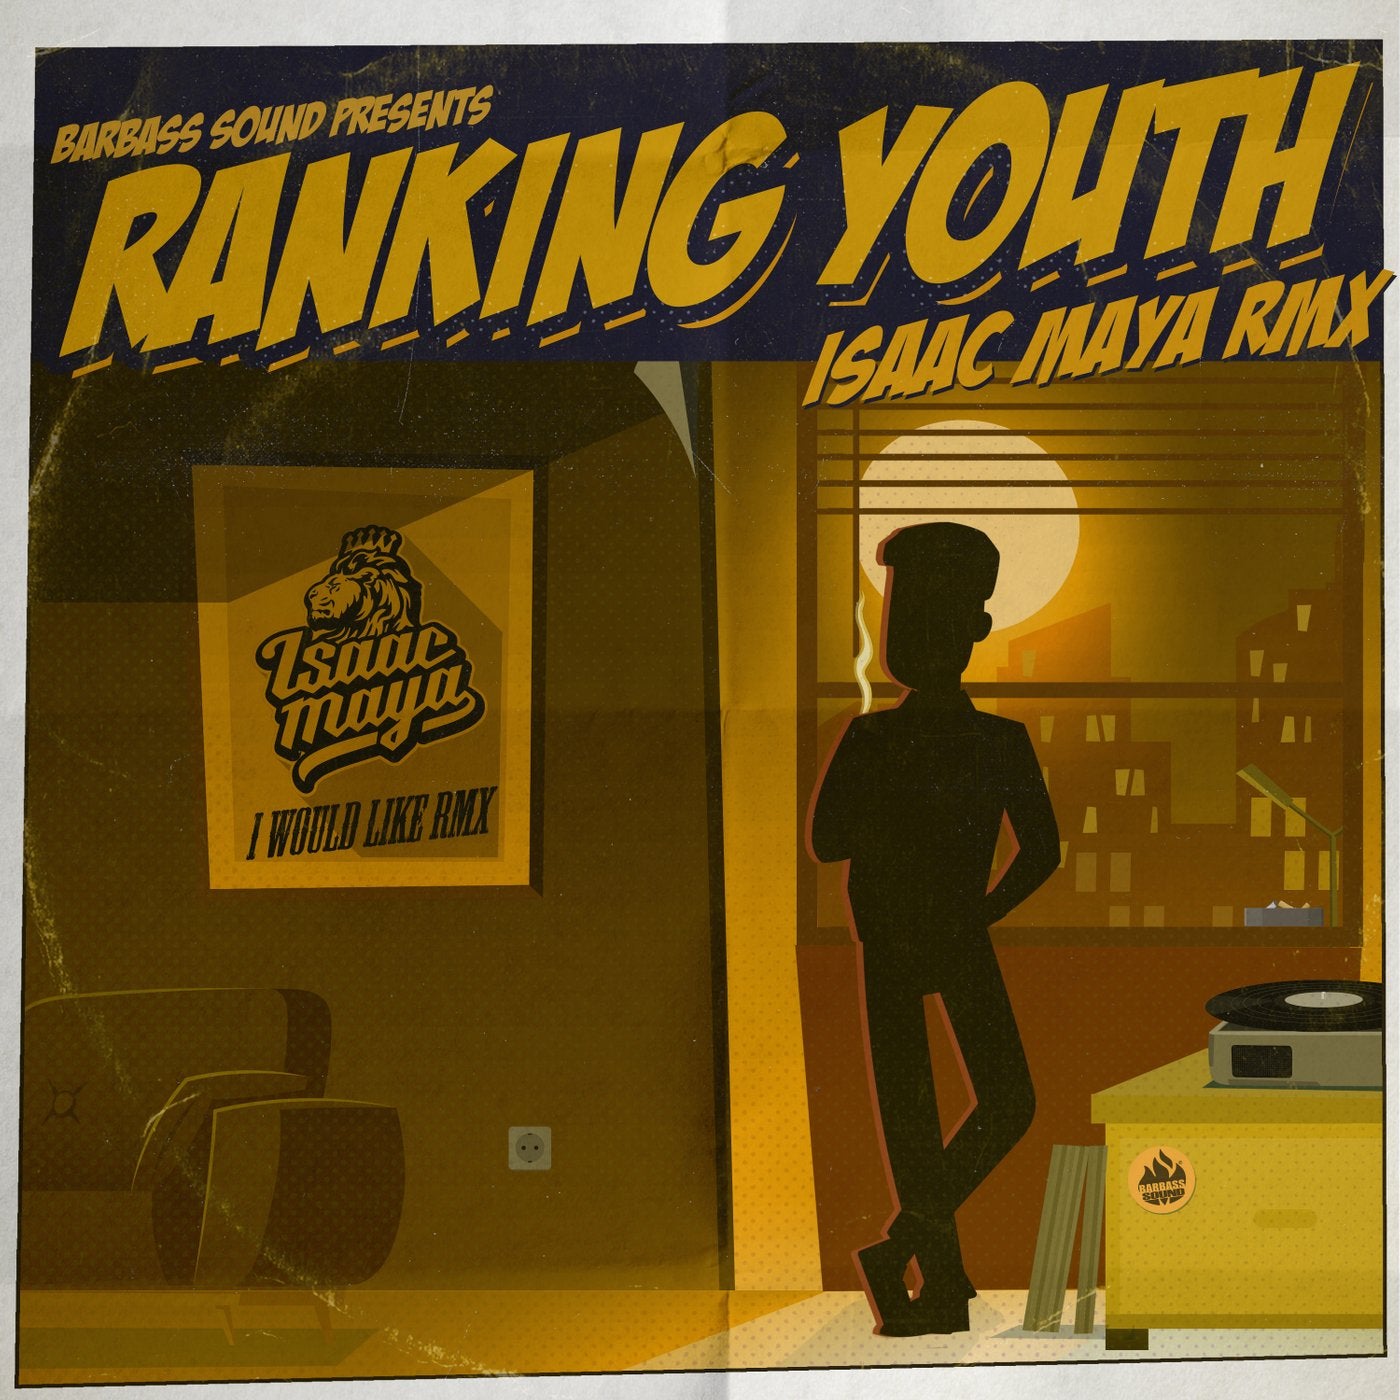 I Would Like (feat. Ranking Youth) [Isaac Maya Remix]